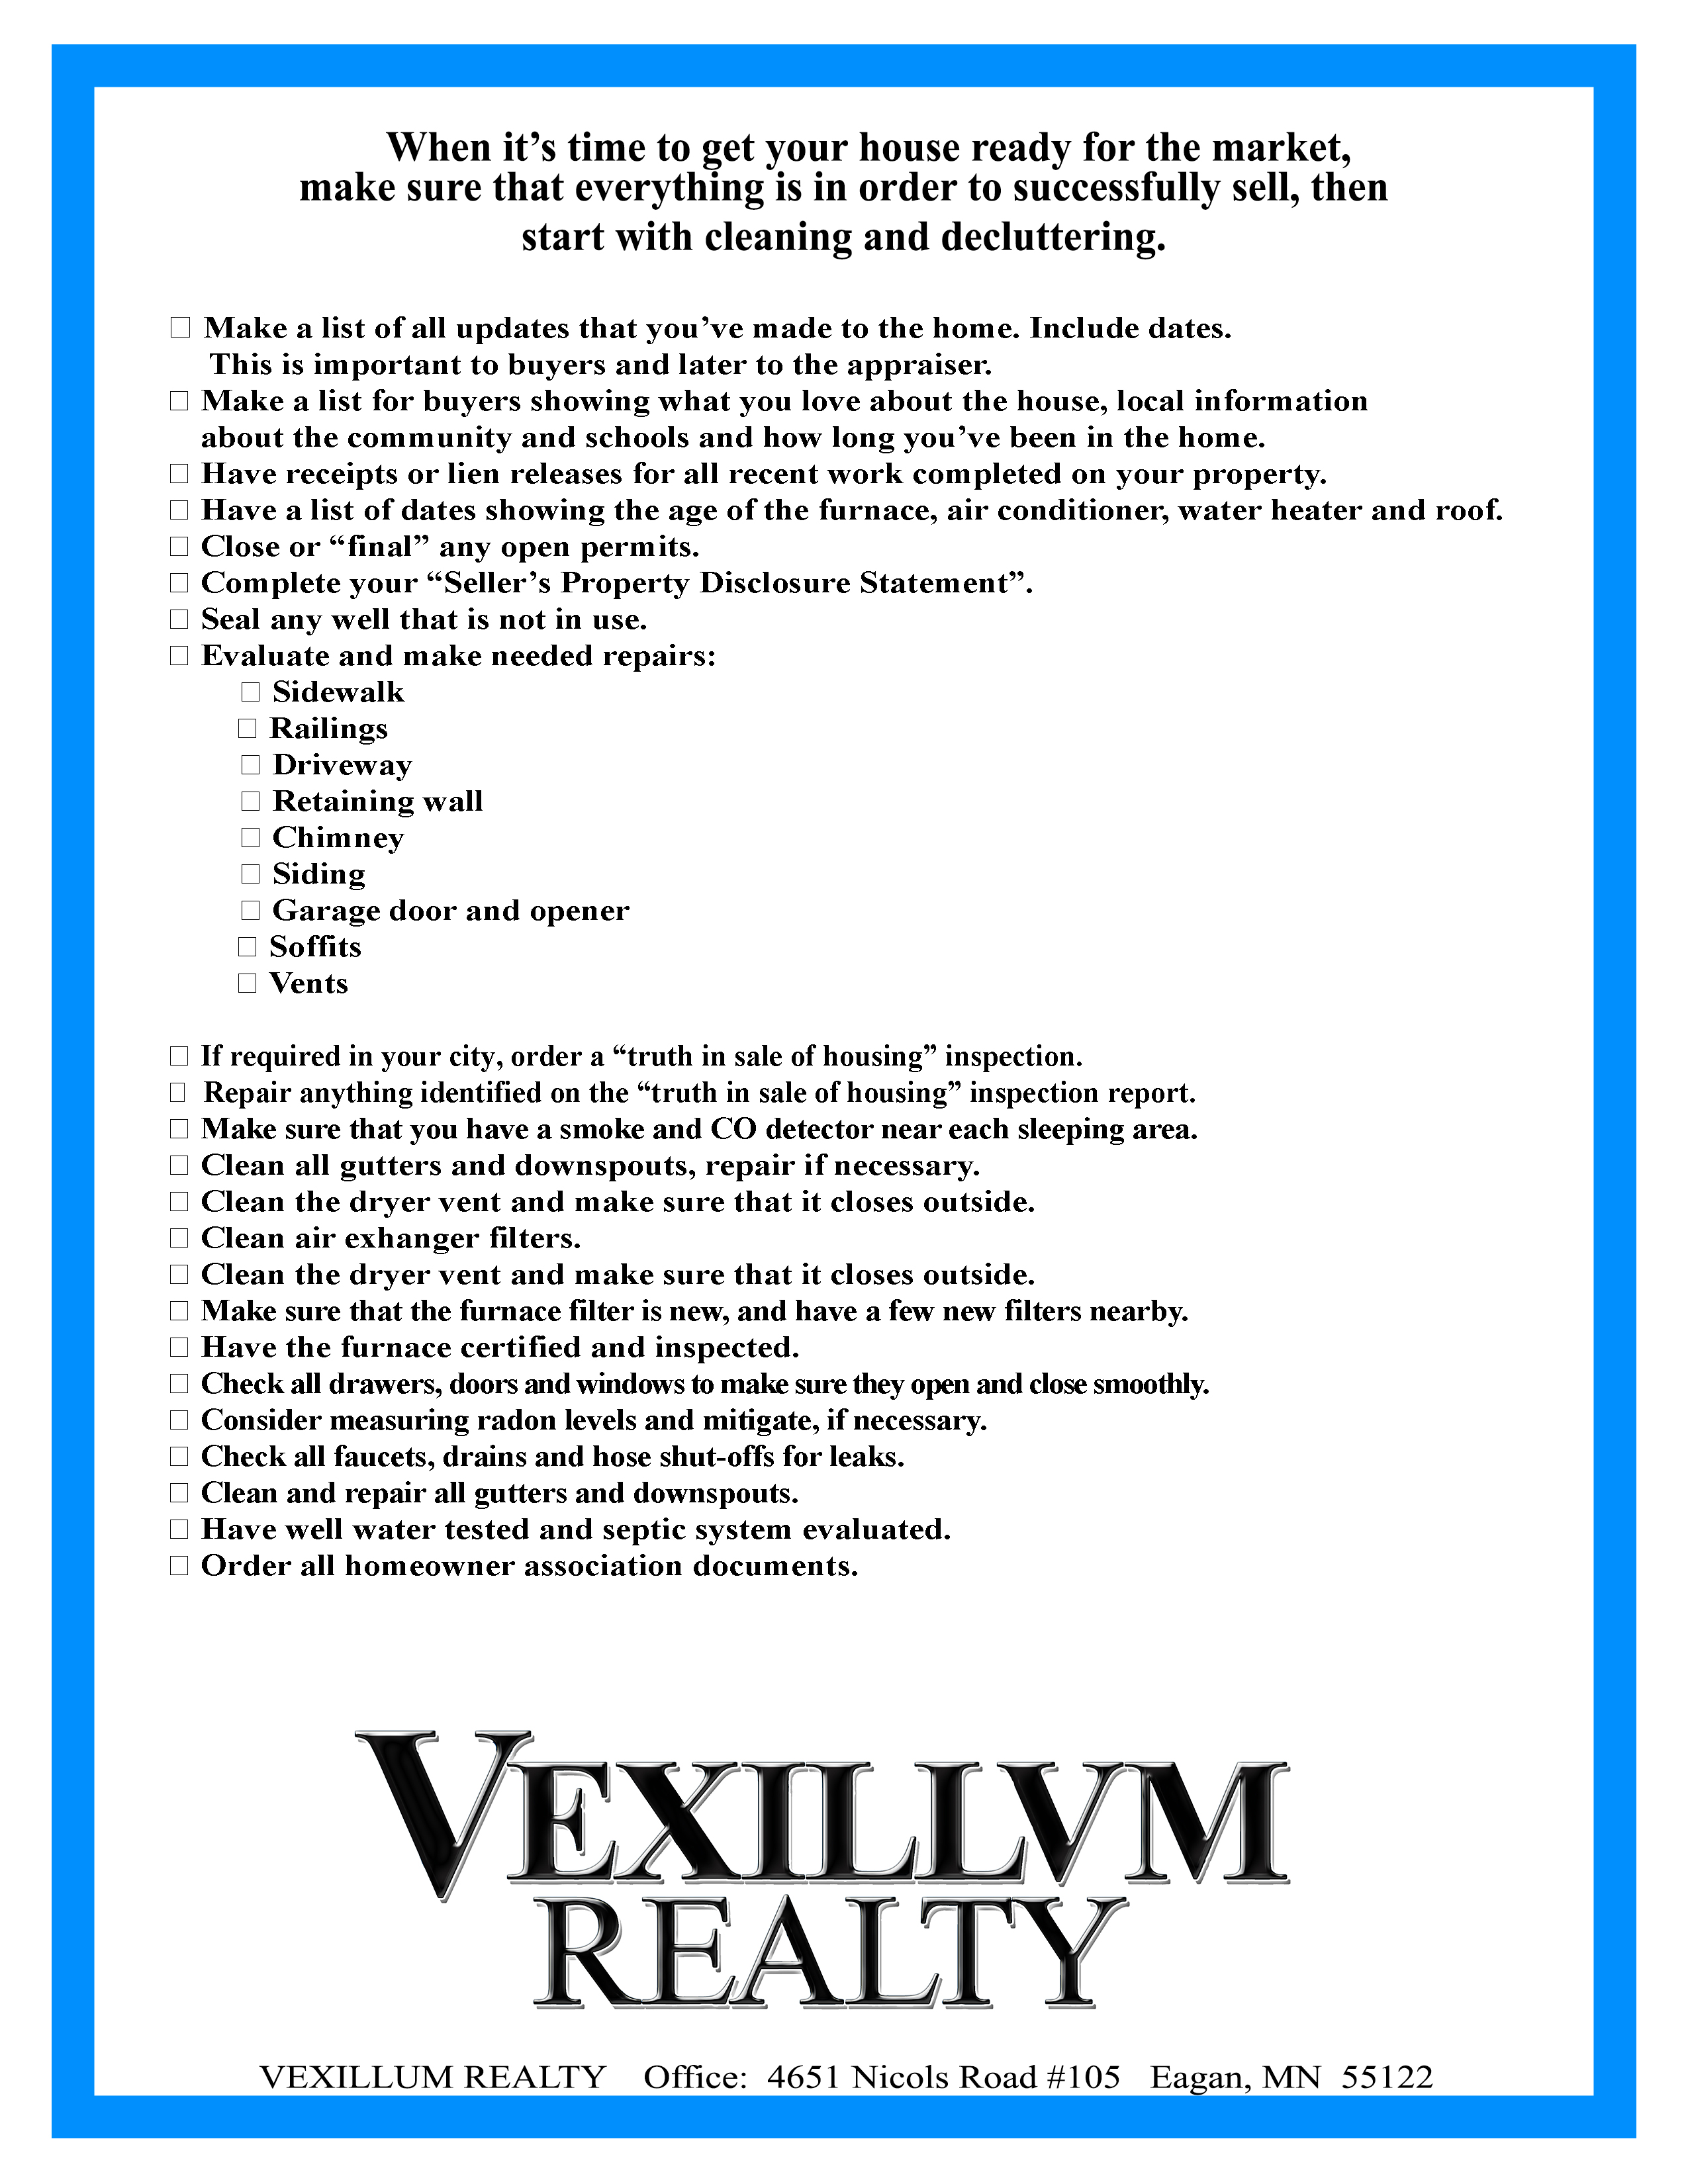 Home Seller Checklist Vexillum Realty Mark Westpfahl